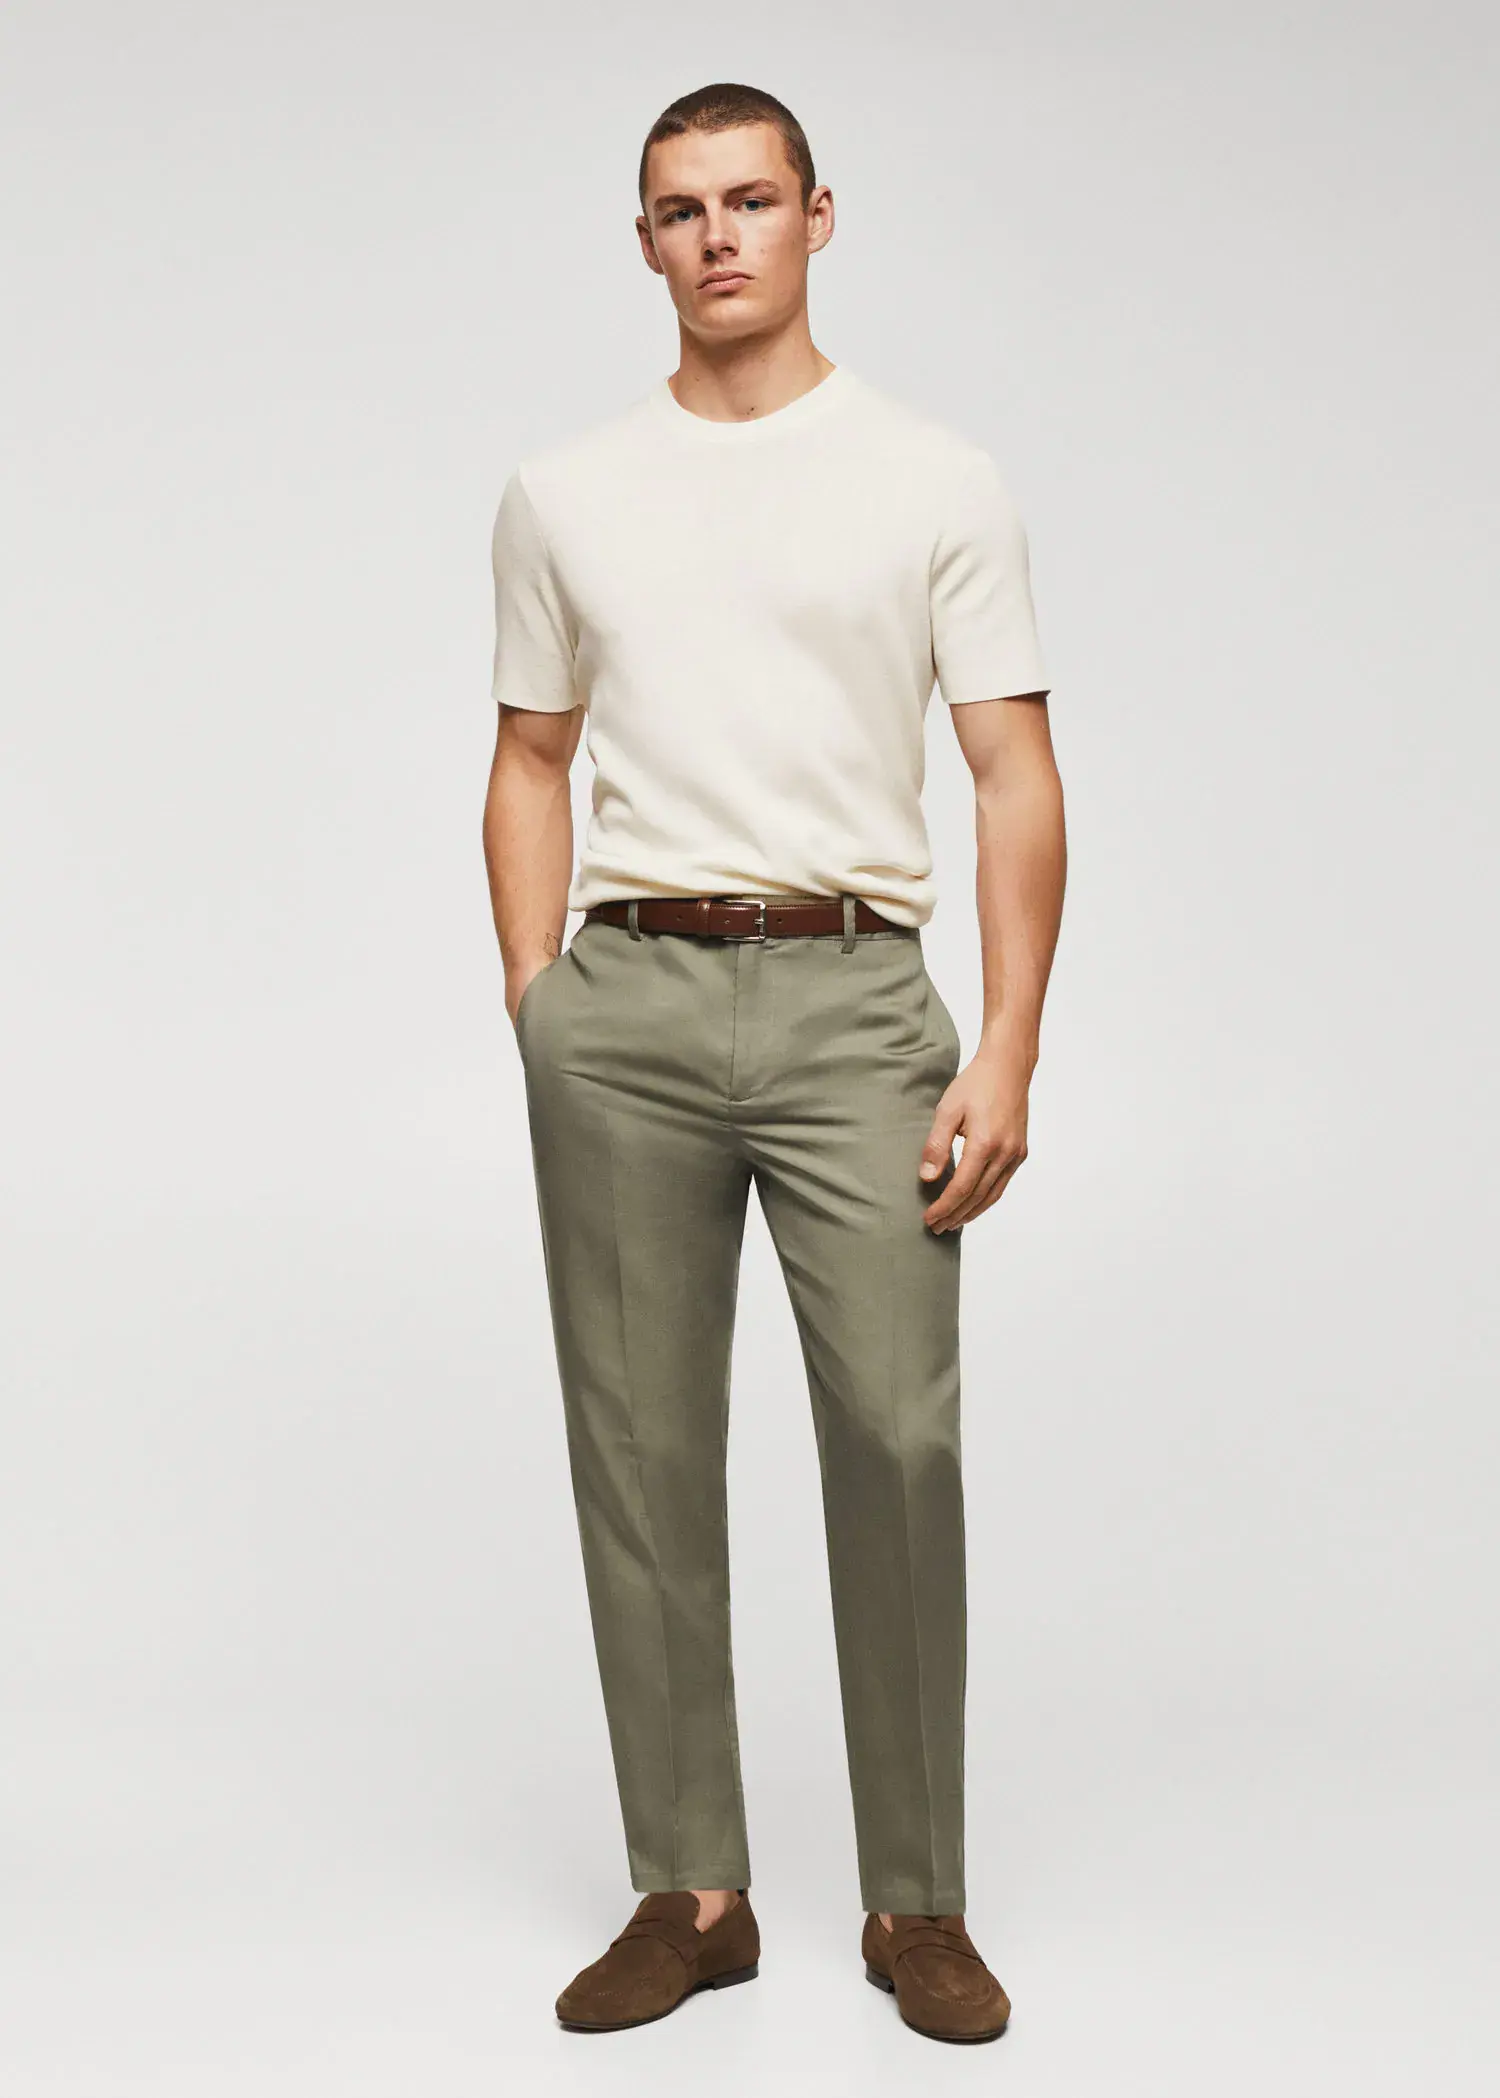 Mango Cotton fine-knit t-shirt. a man in a white shirt and green pants. 